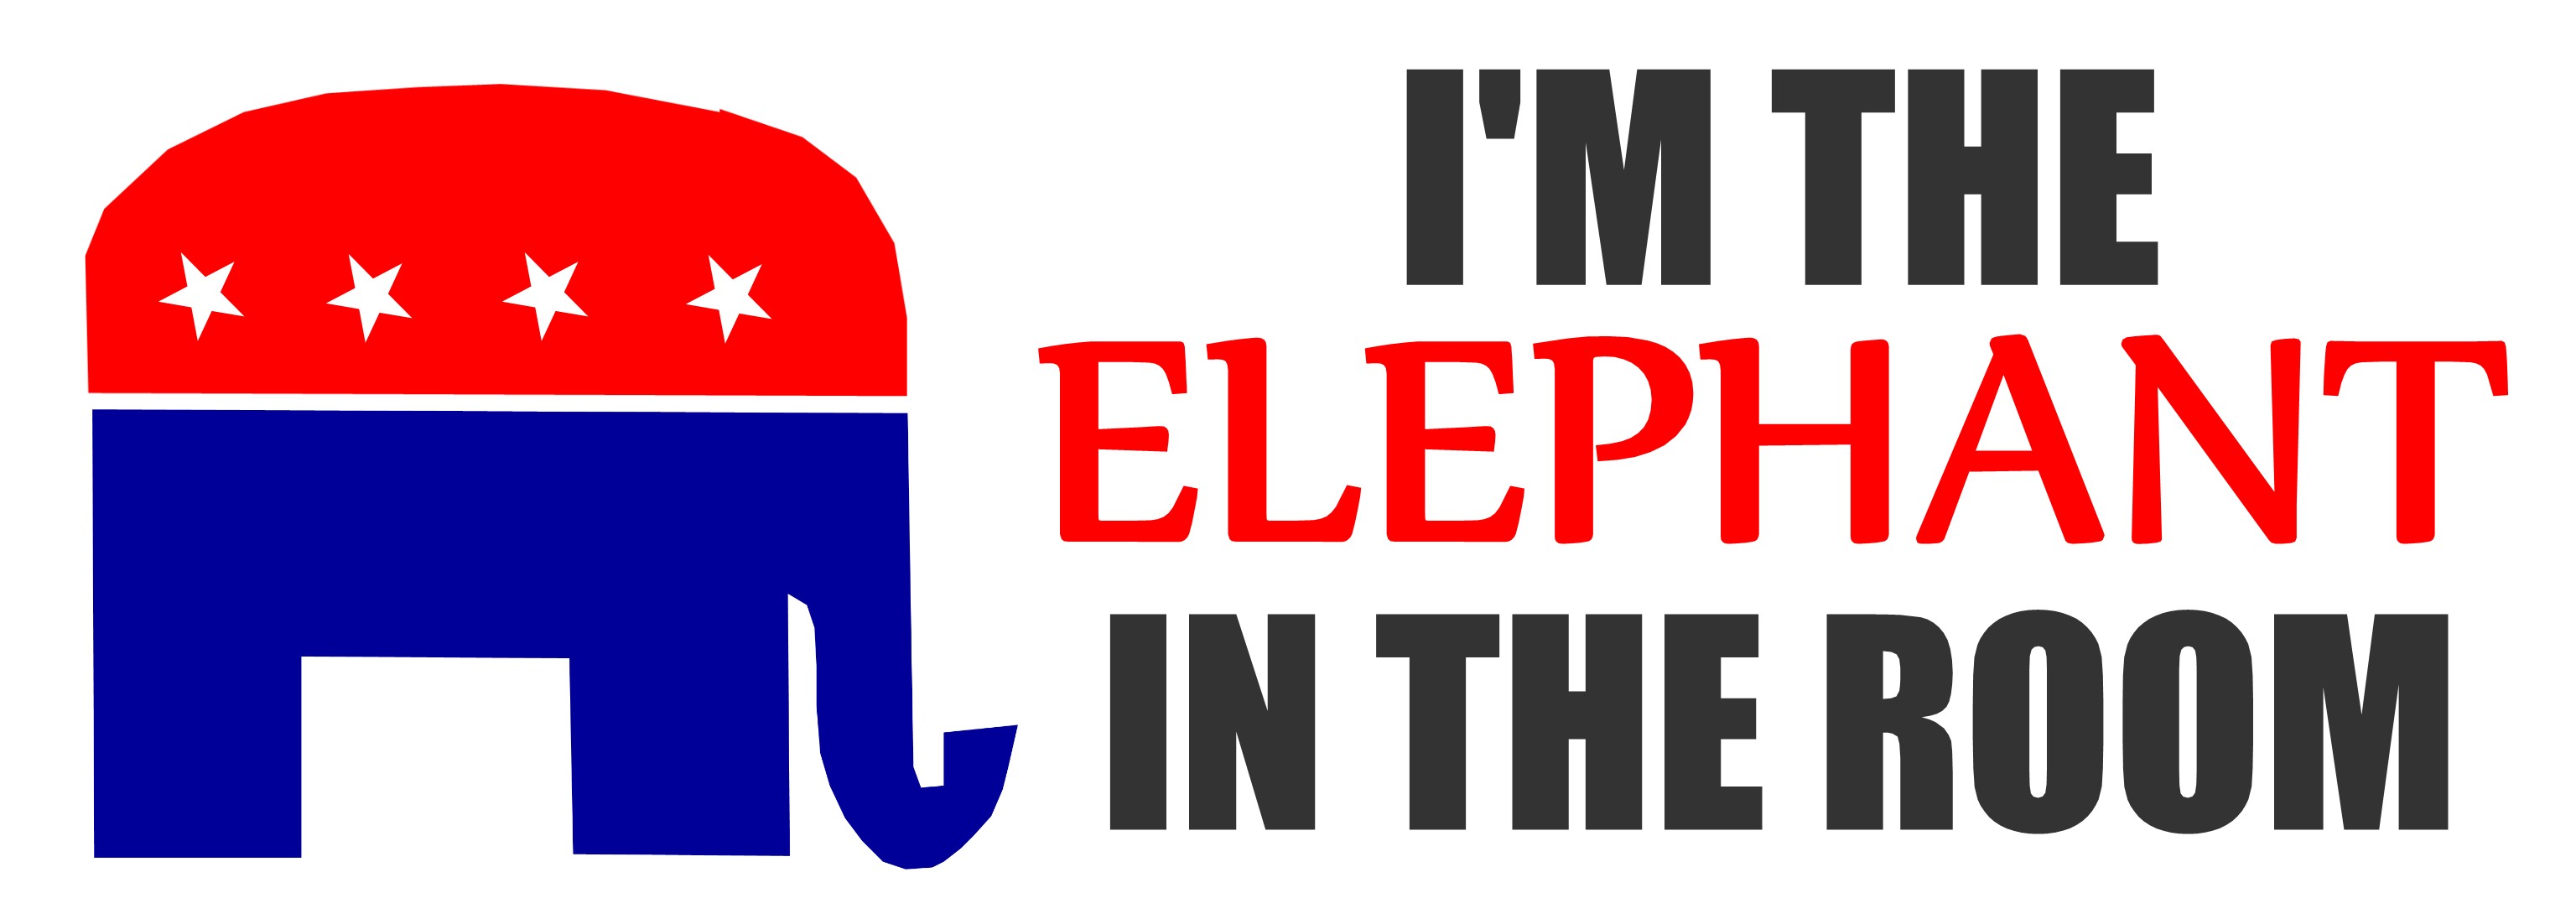 REPUBLICAN-ELEPHANT.jpg